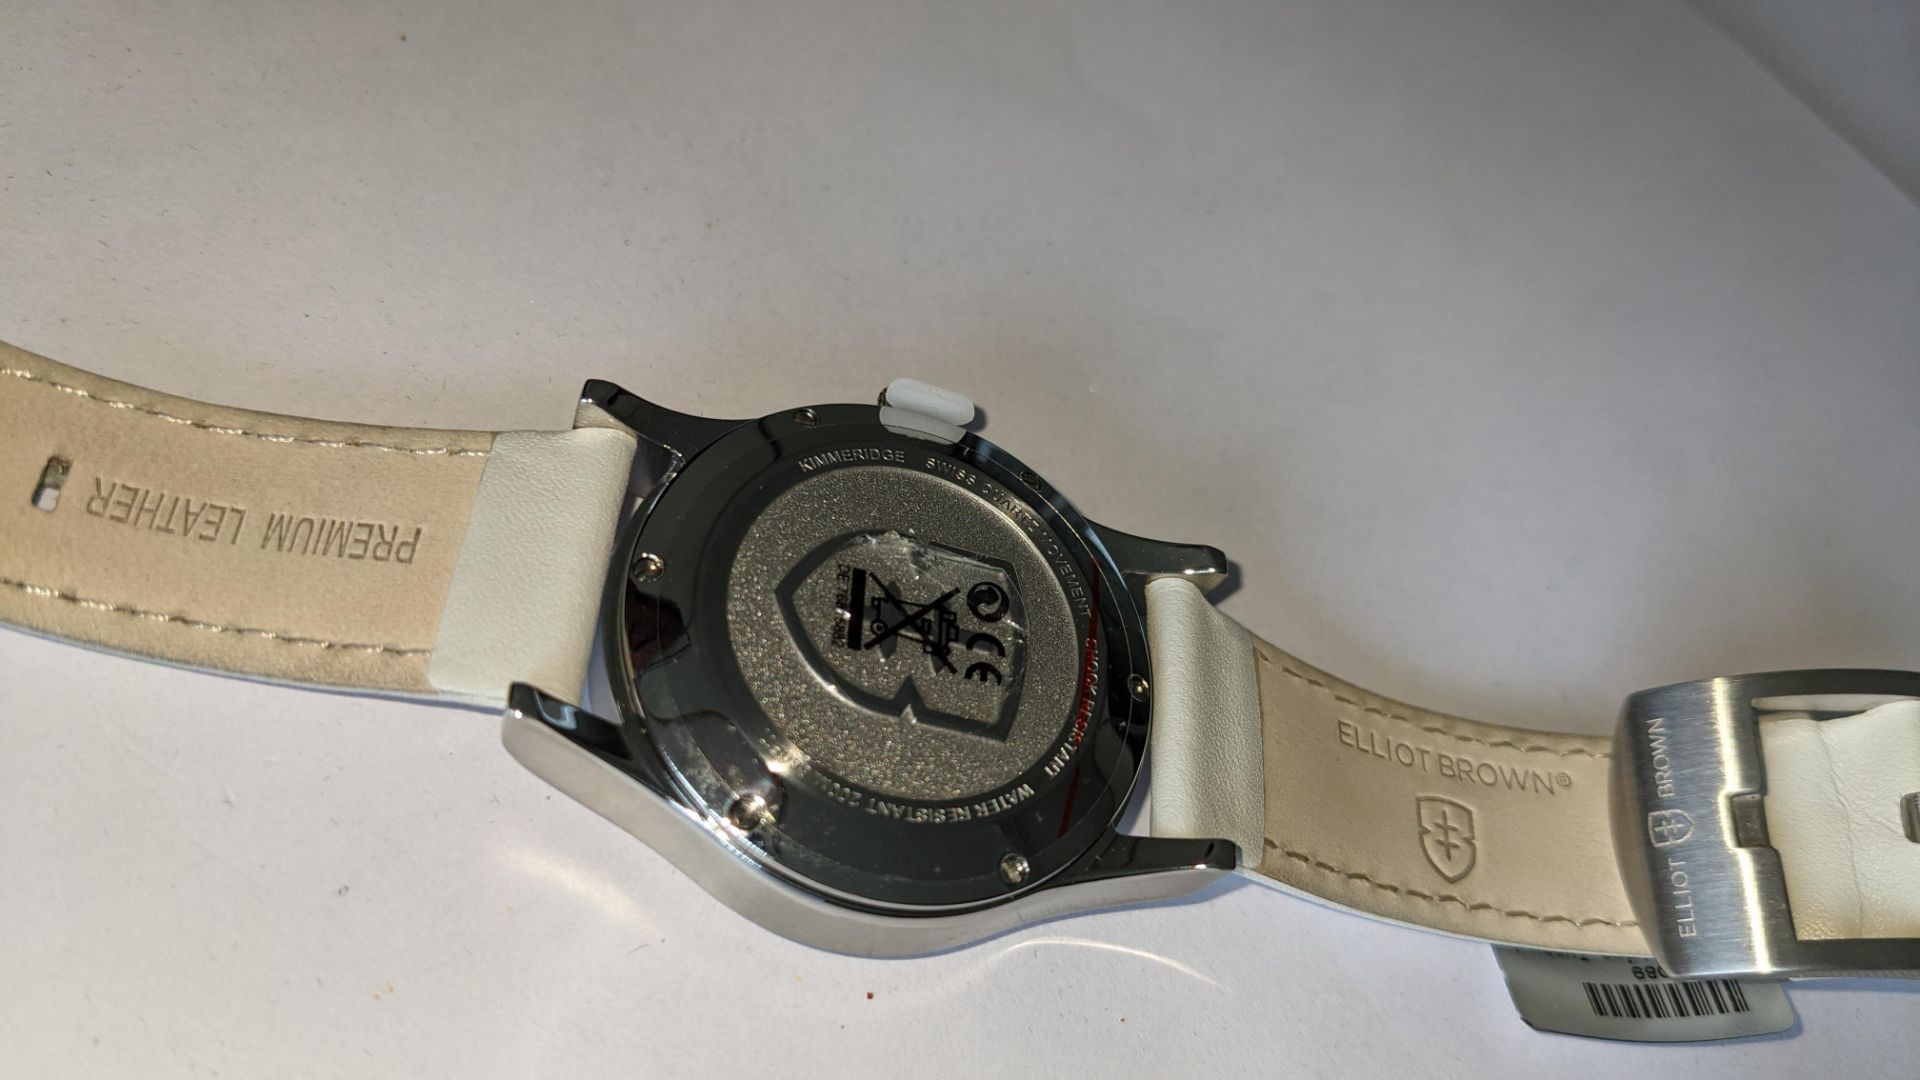 Elliot Brown The Kimmeridge watch, product code 405-008-L54. Stainless steel, 200M water resistant, - Image 13 of 18